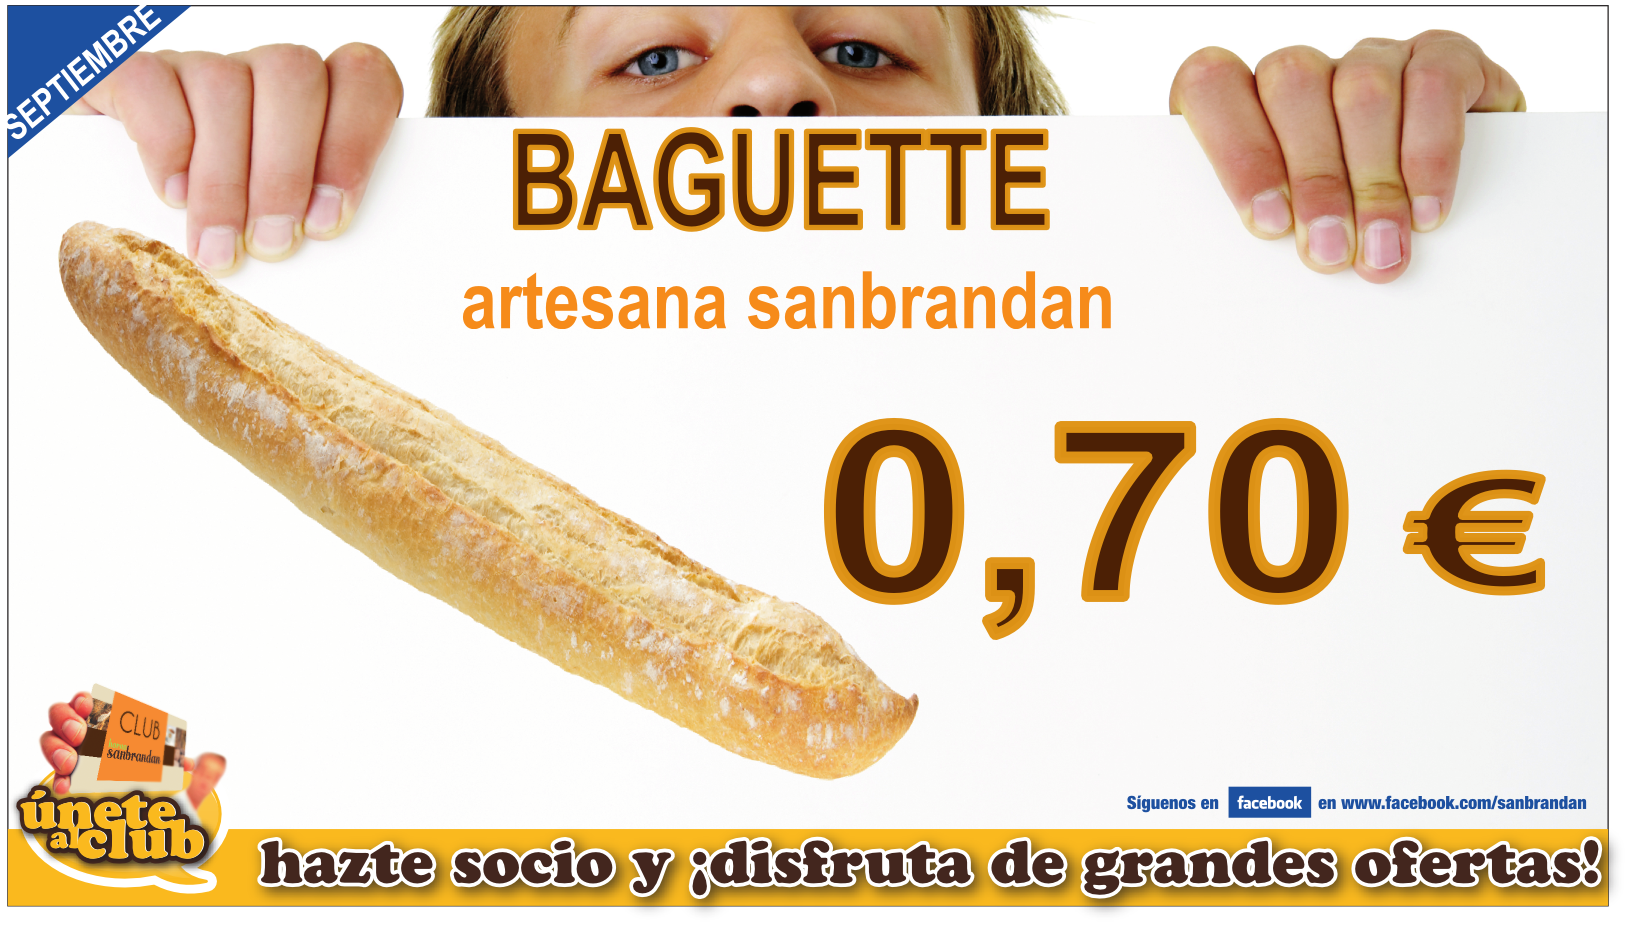 Baguette artesana Sanbrandan a 0,70 €